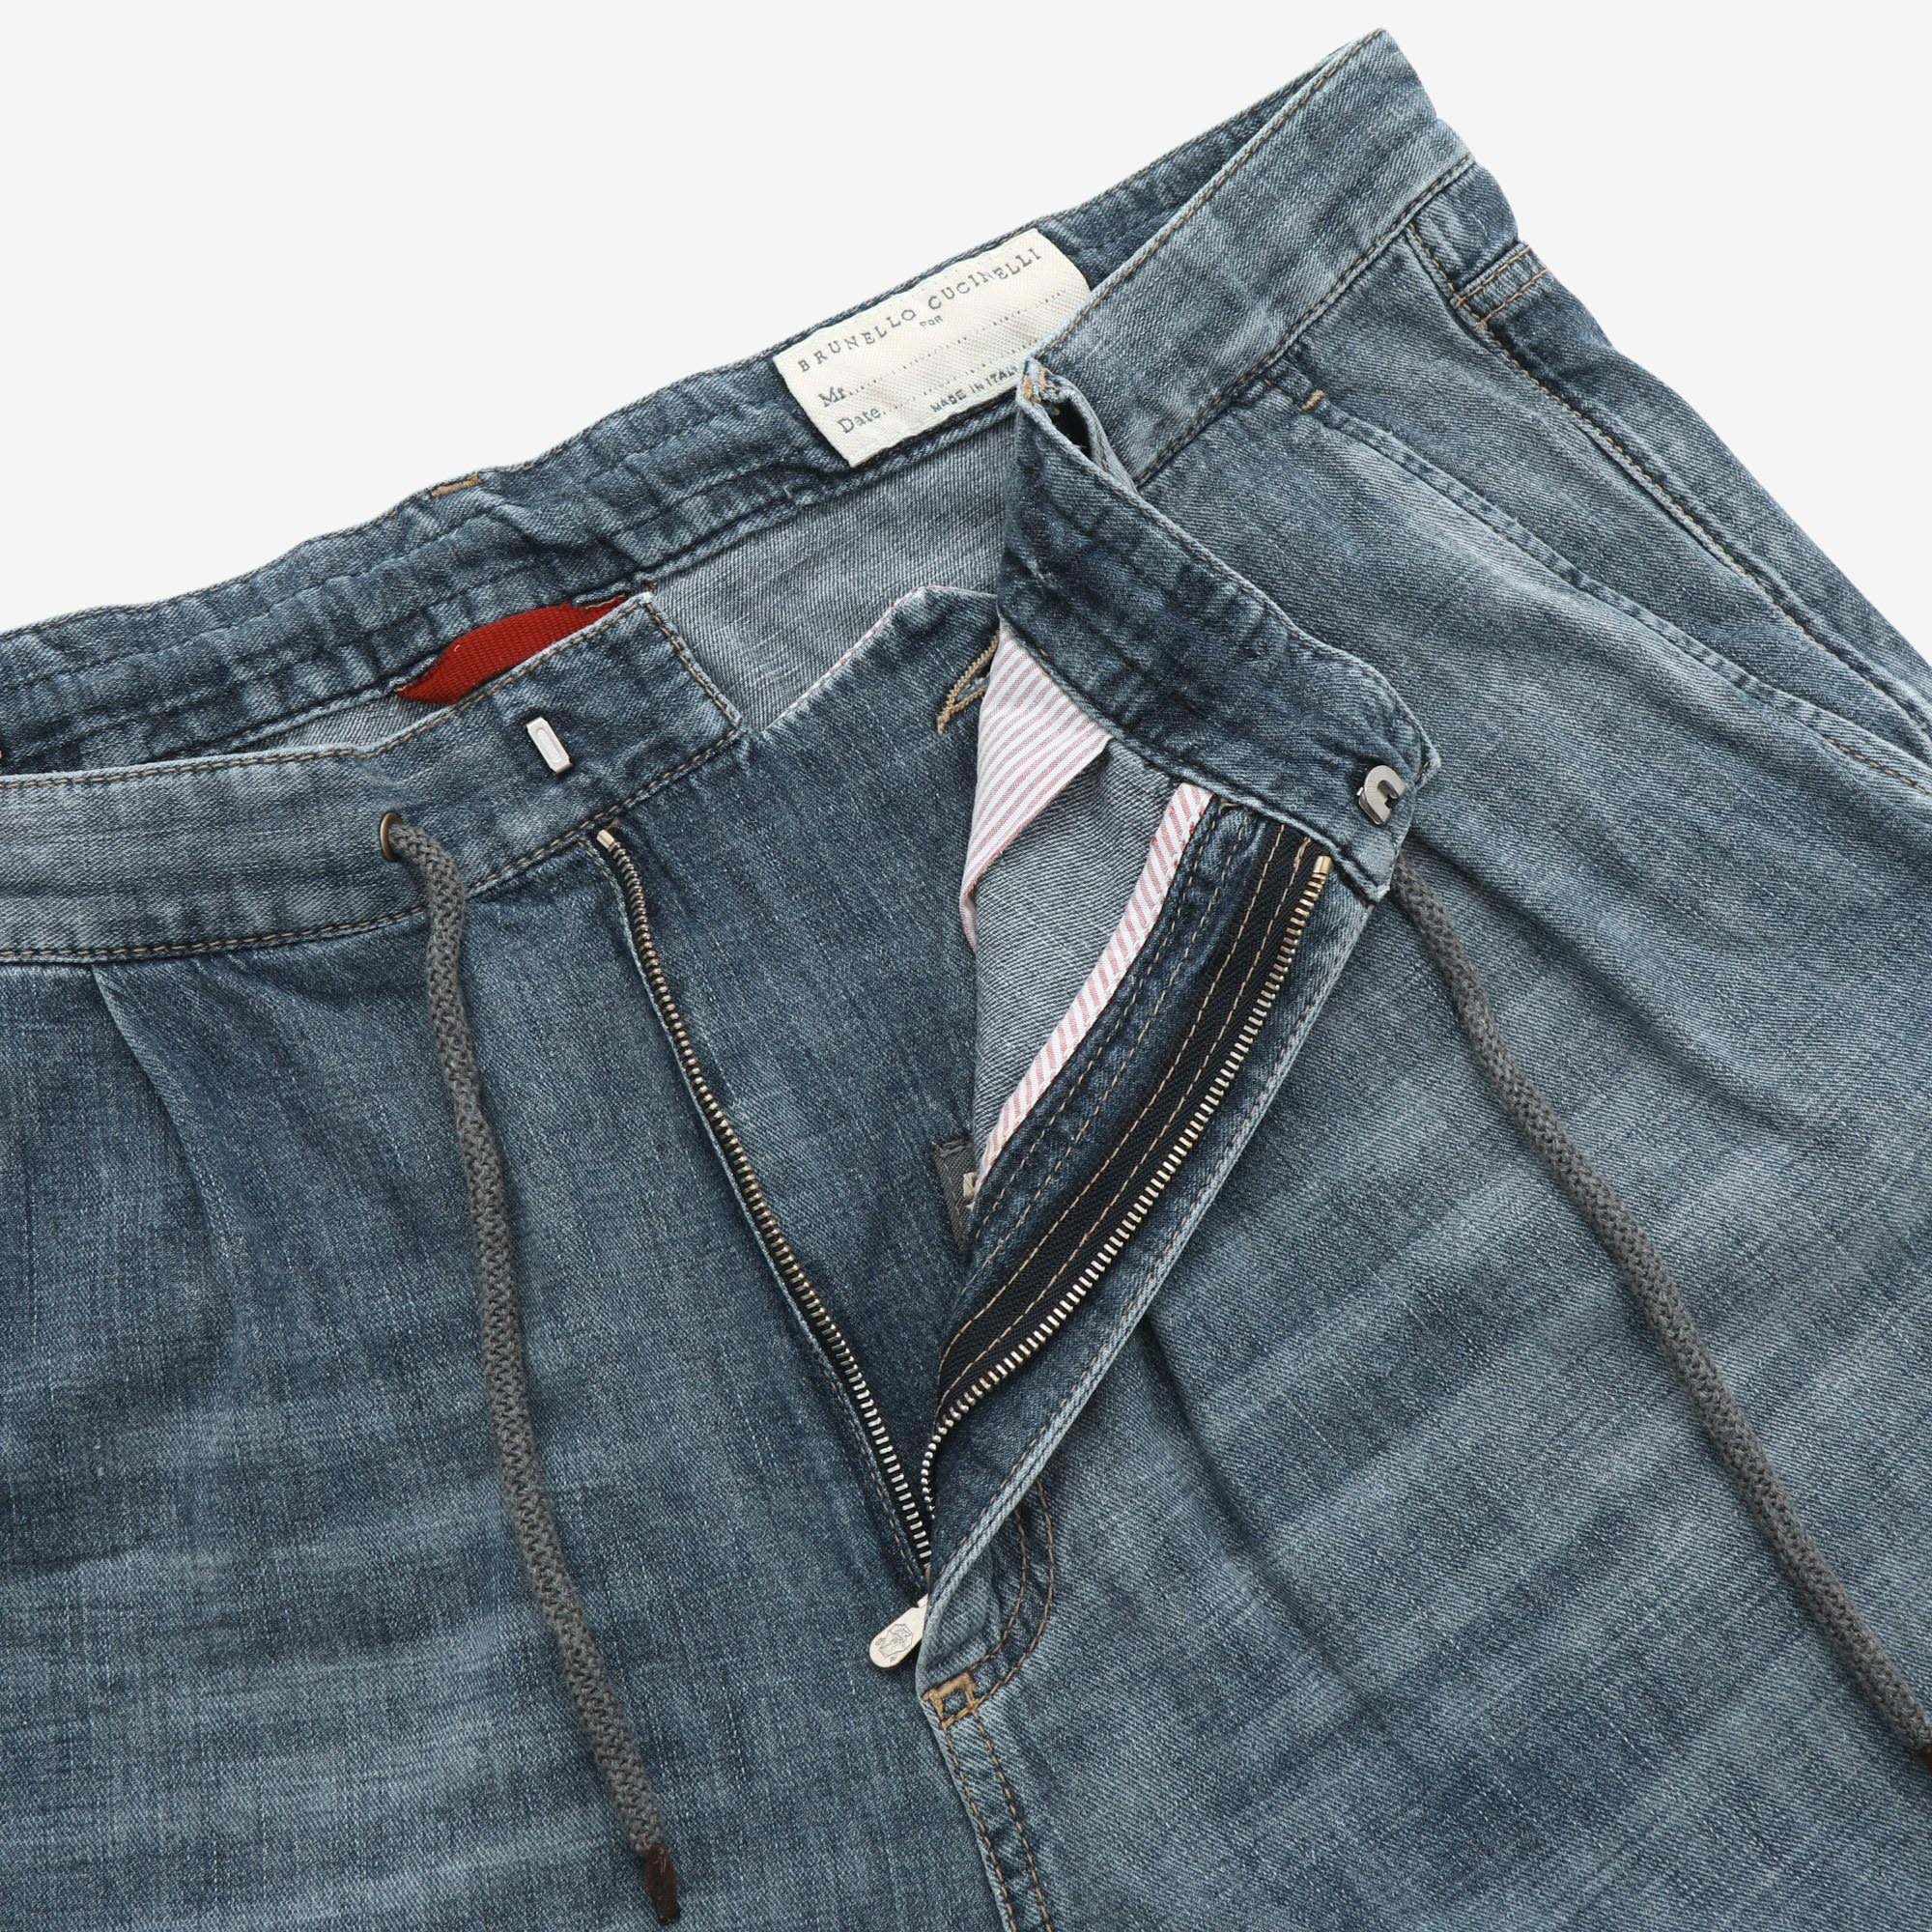 Leisure Fit Jeans (38W x 33L)